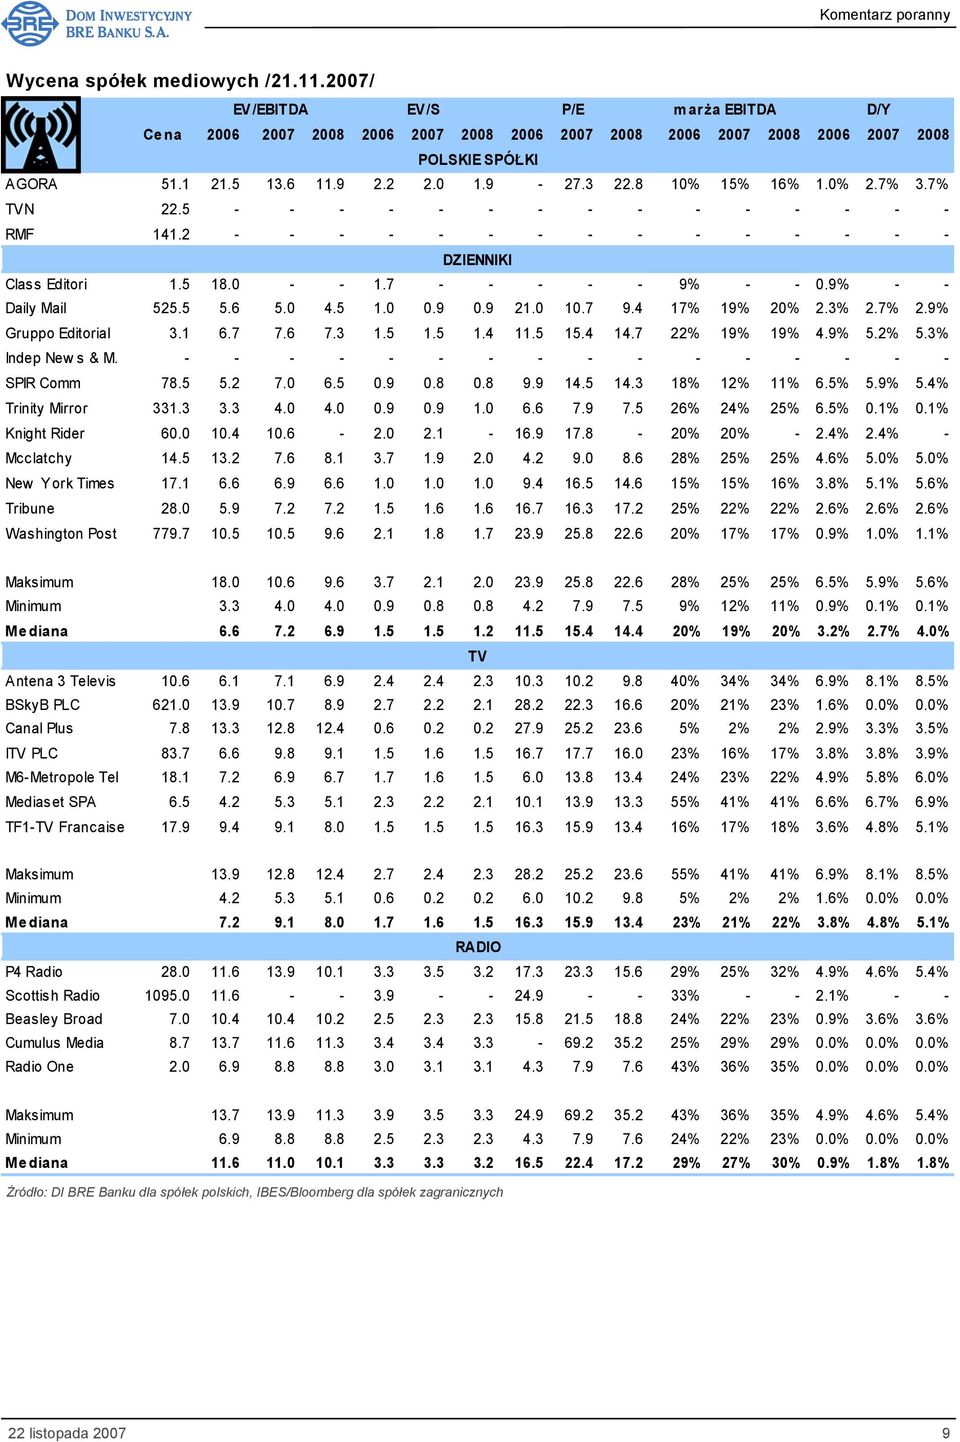 4 17% 19% 20% 2.3% 2.7% 2.9% Gruppo Editorial 3.1 6.7 7.6 7.3 1.5 1.5 1.4 11.5 15.4 14.7 22% 19% 19% 4.9% 5.2% 5.3% Indep New s & M. - - - - - - - - - - - - - - - - SPIR Comm 78.5 5.2 7.0 6.5 0.9 0.